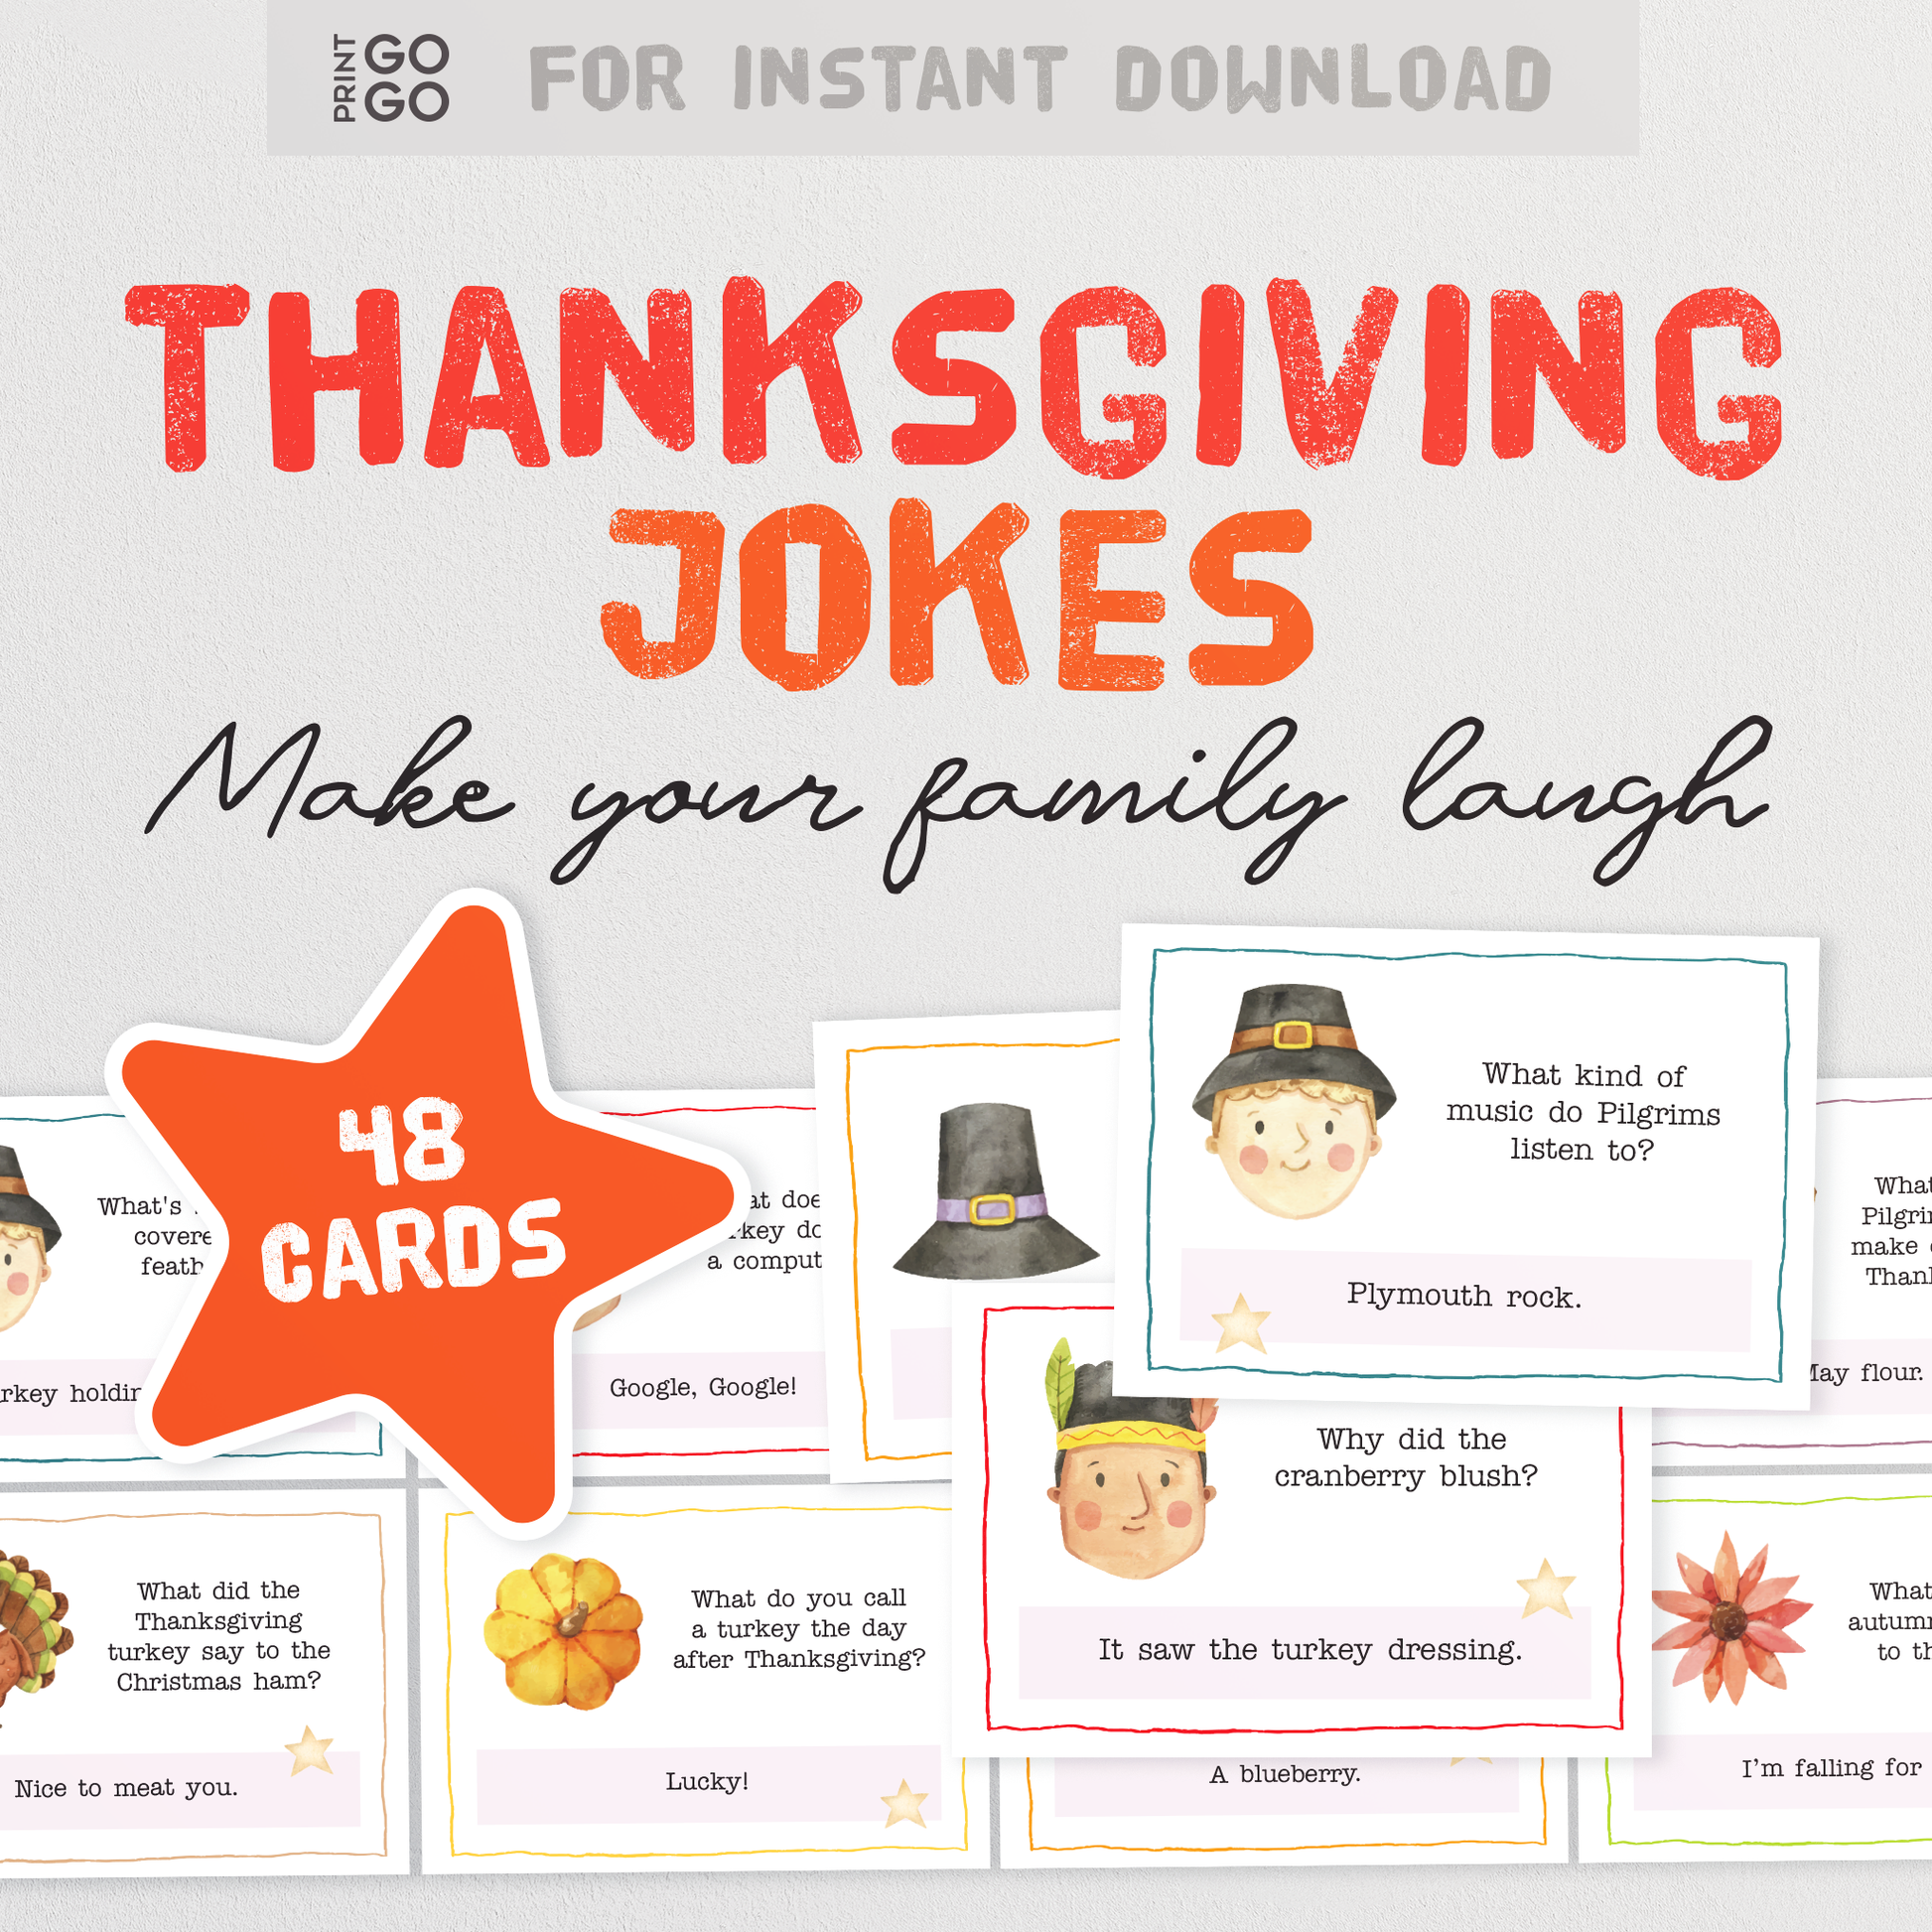 Thanksgiving Joke Cards - Family Friendly Jokes to Make You Laugh